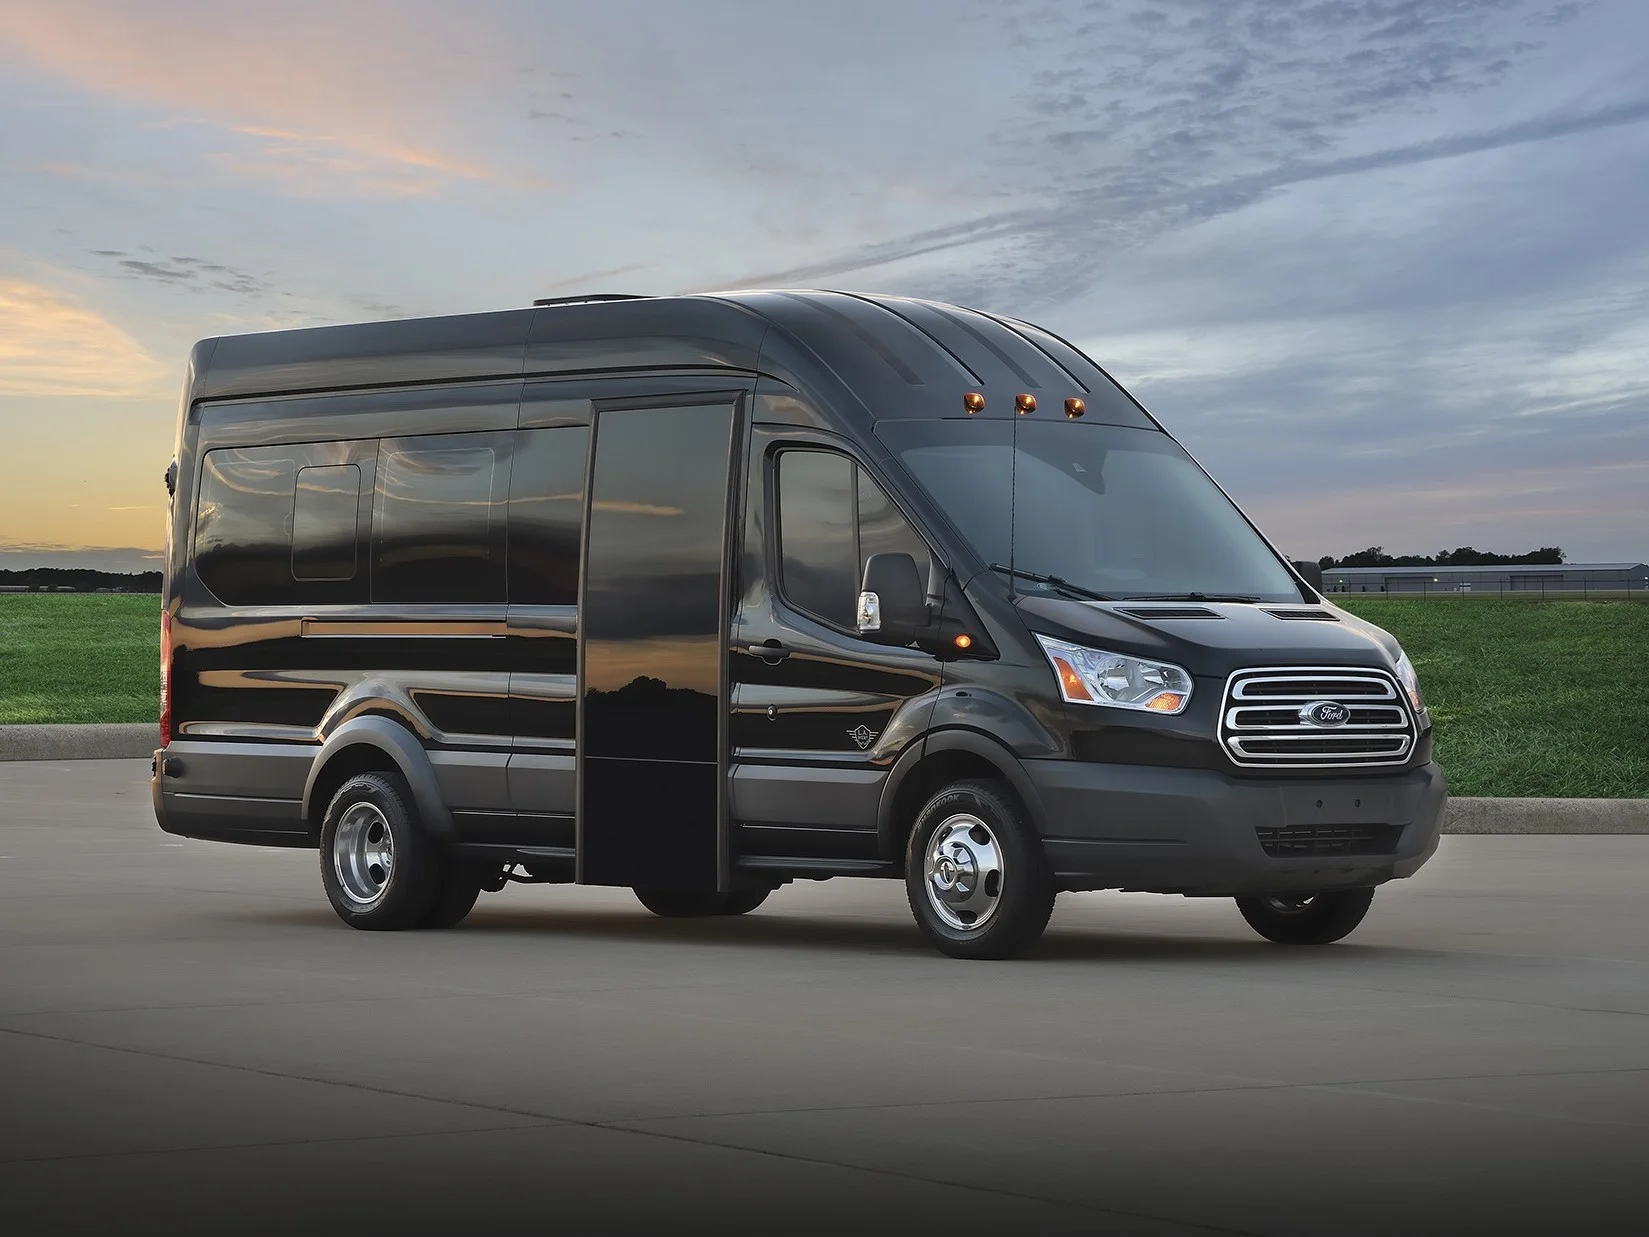 Ford Ev Cargo Van Transit Emotors Introduced Conducir Hd Fleetnewsdaily